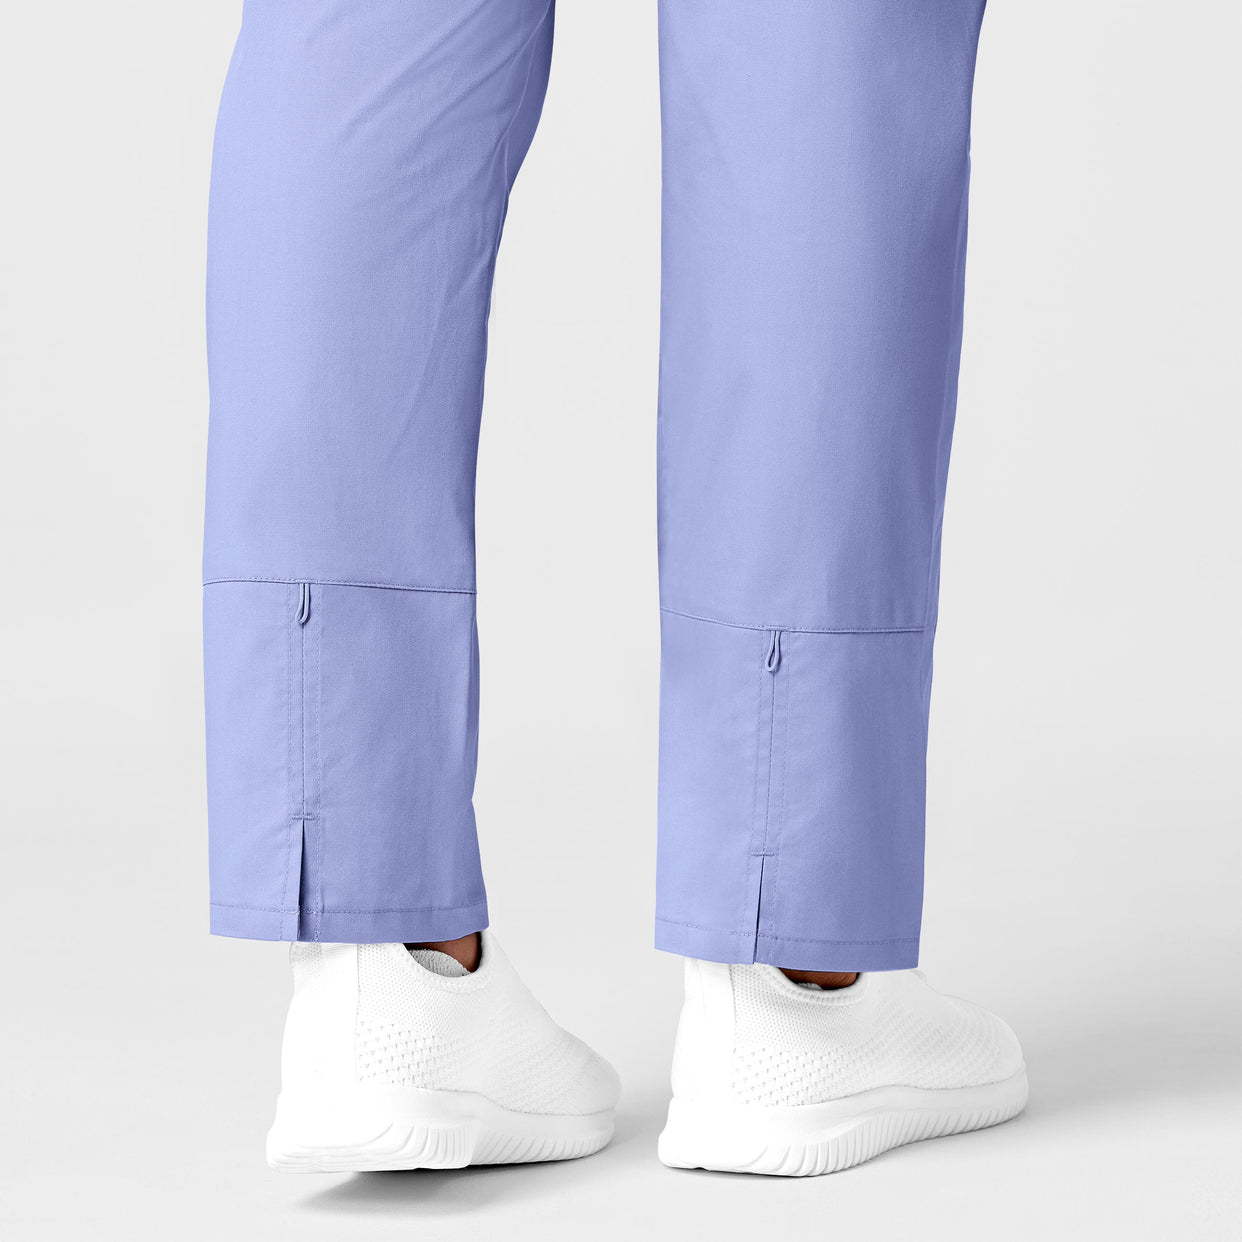 WonderWORK Women's Convertible Slim Leg Scrub Pant - Ceil Blue